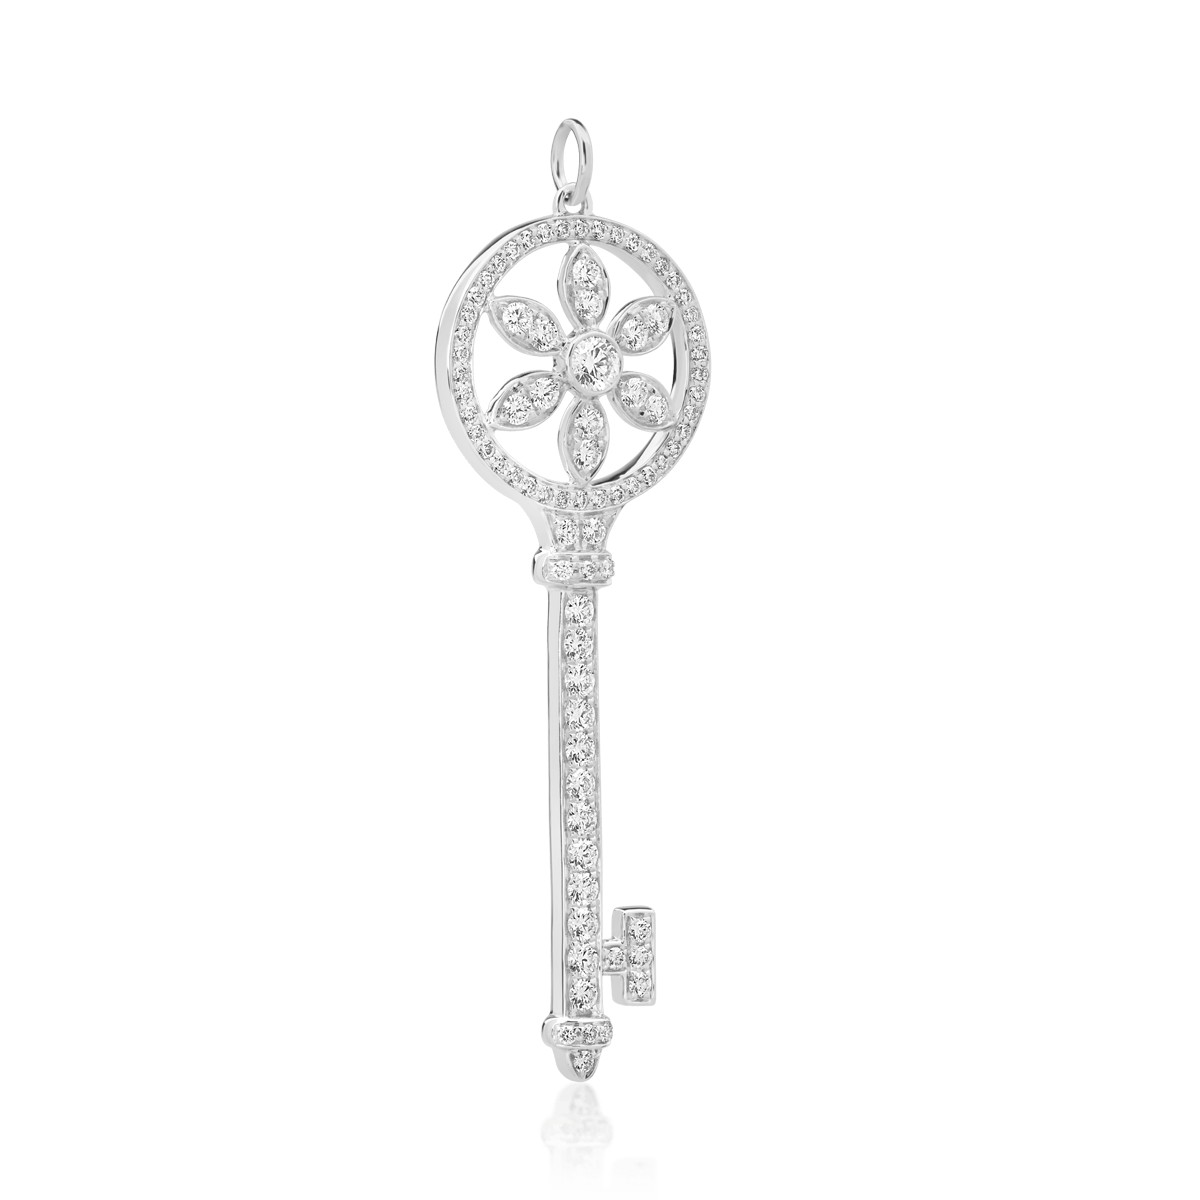 18K white gold key pendant with 0.11ct diamond and 0.78ct diamonds